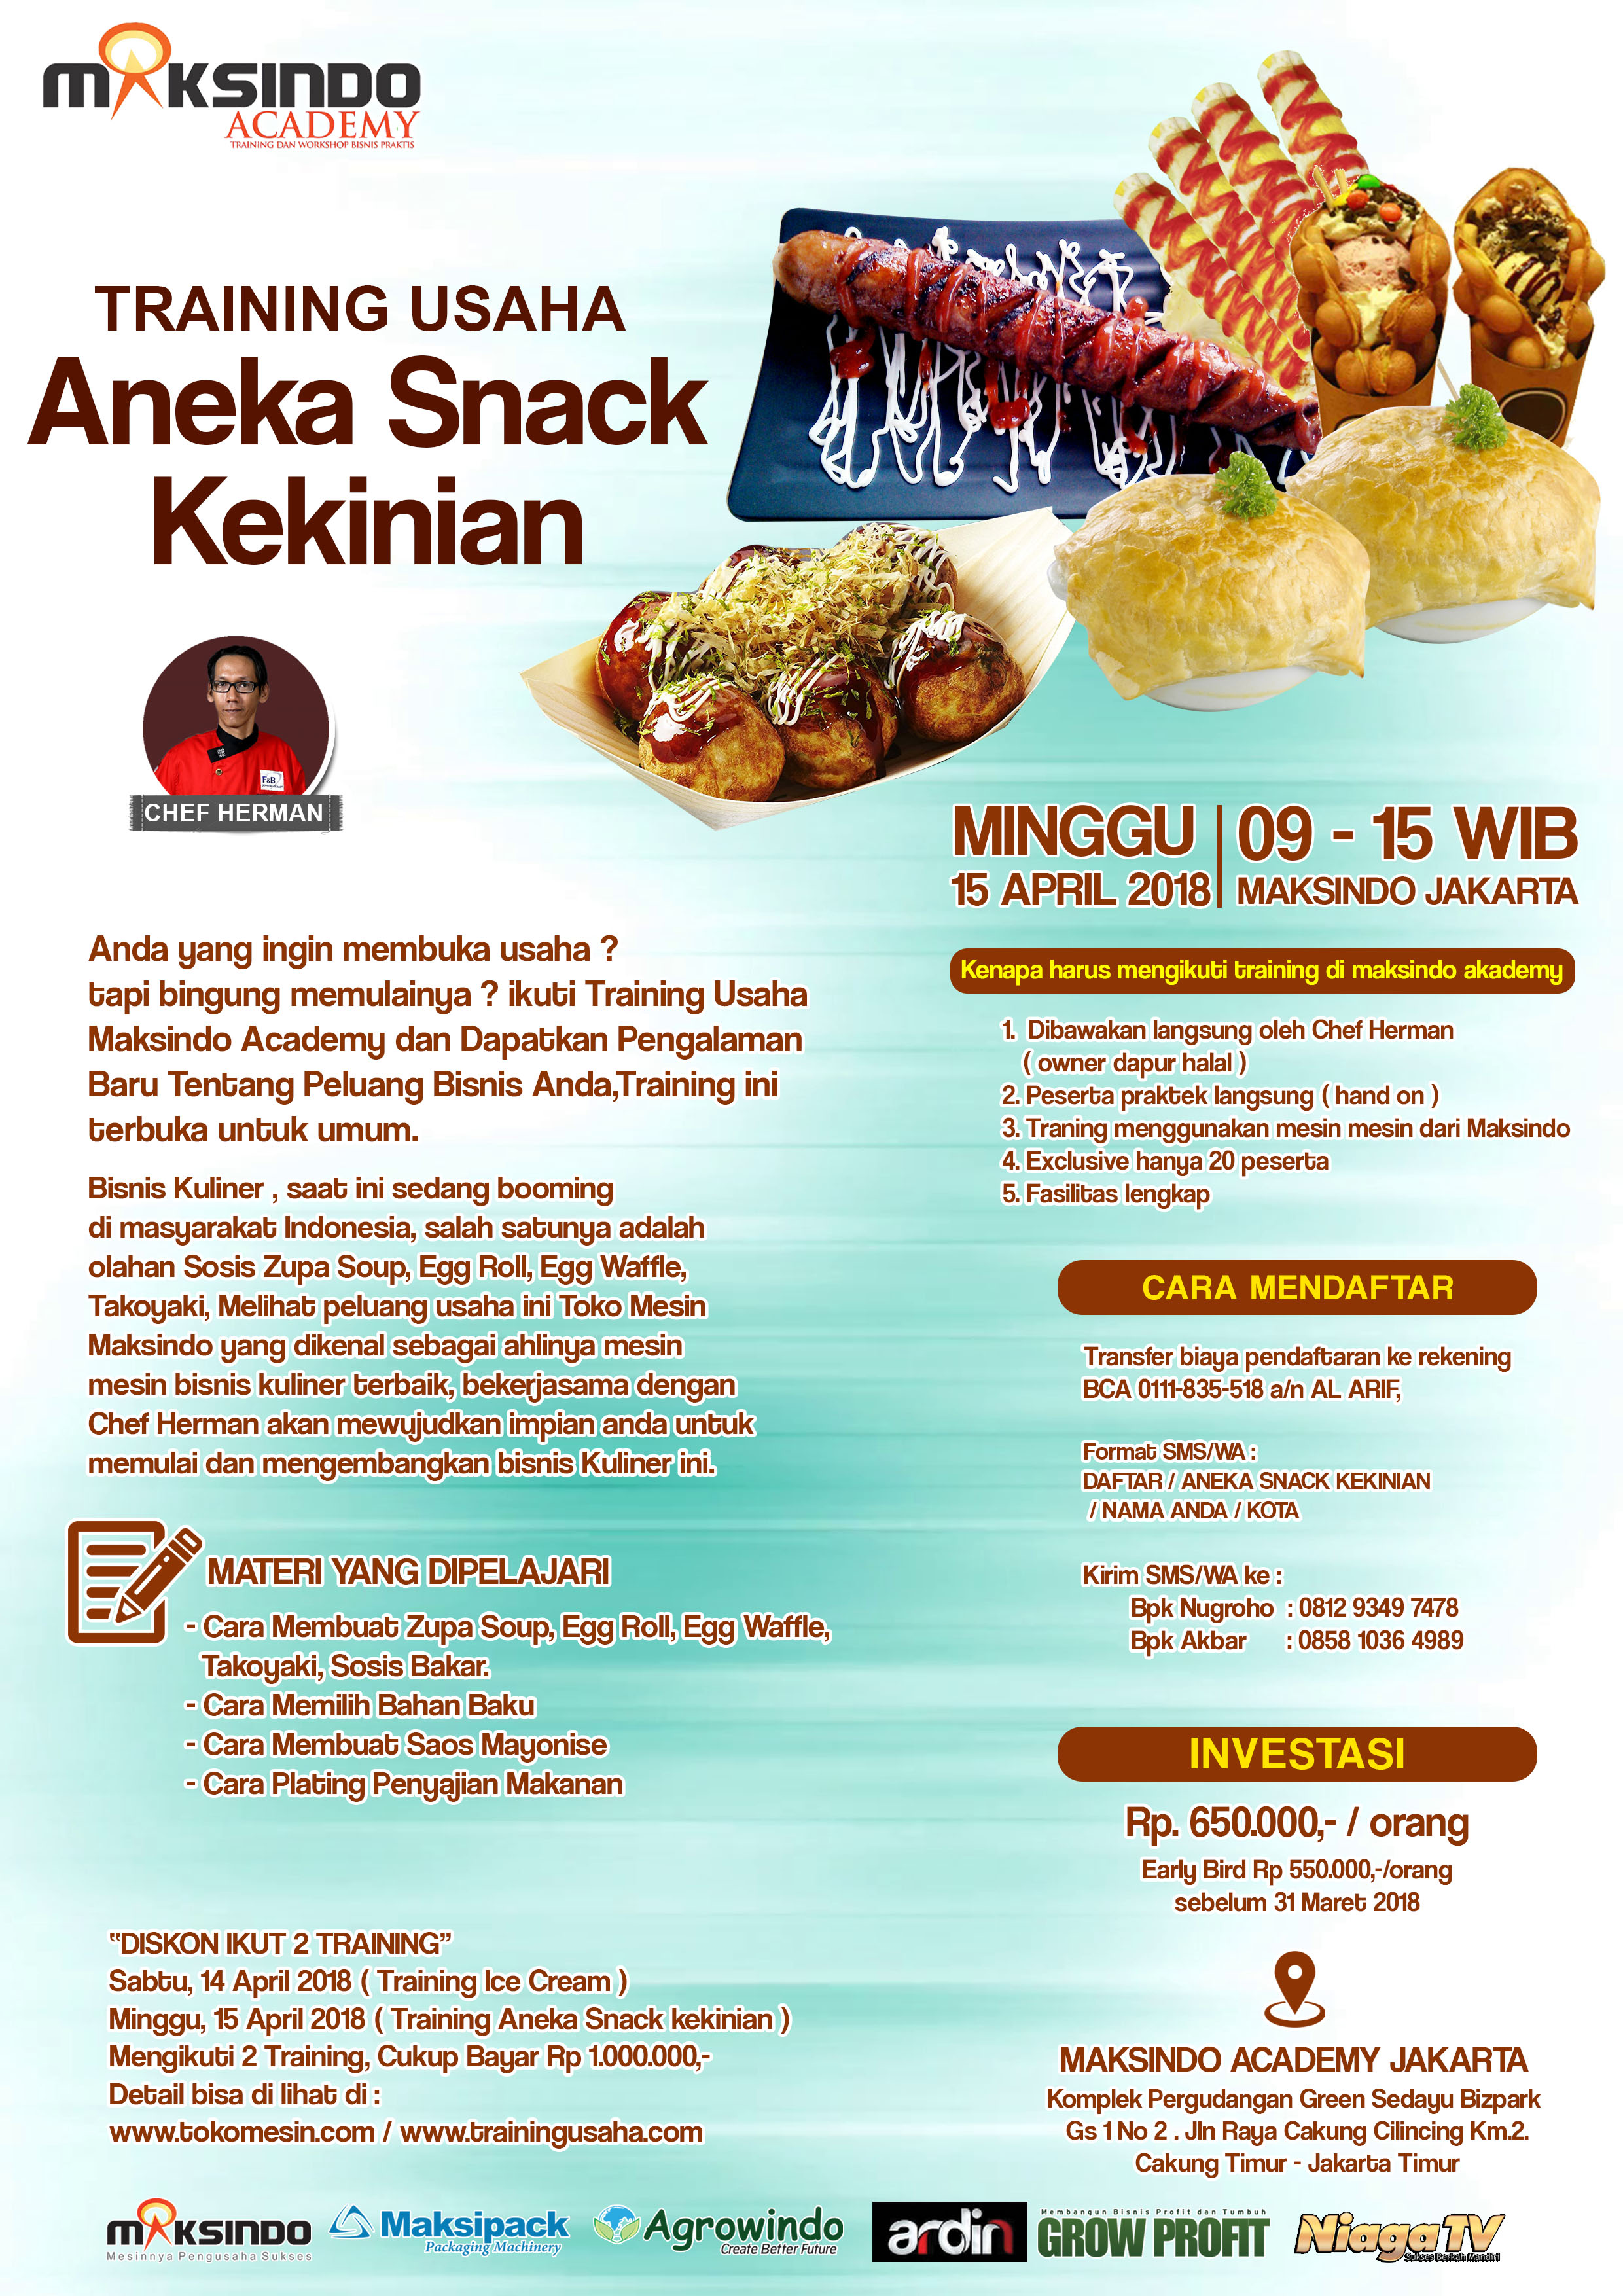 Training Usaha Aneka Snack Kekinian, 15 April 2018